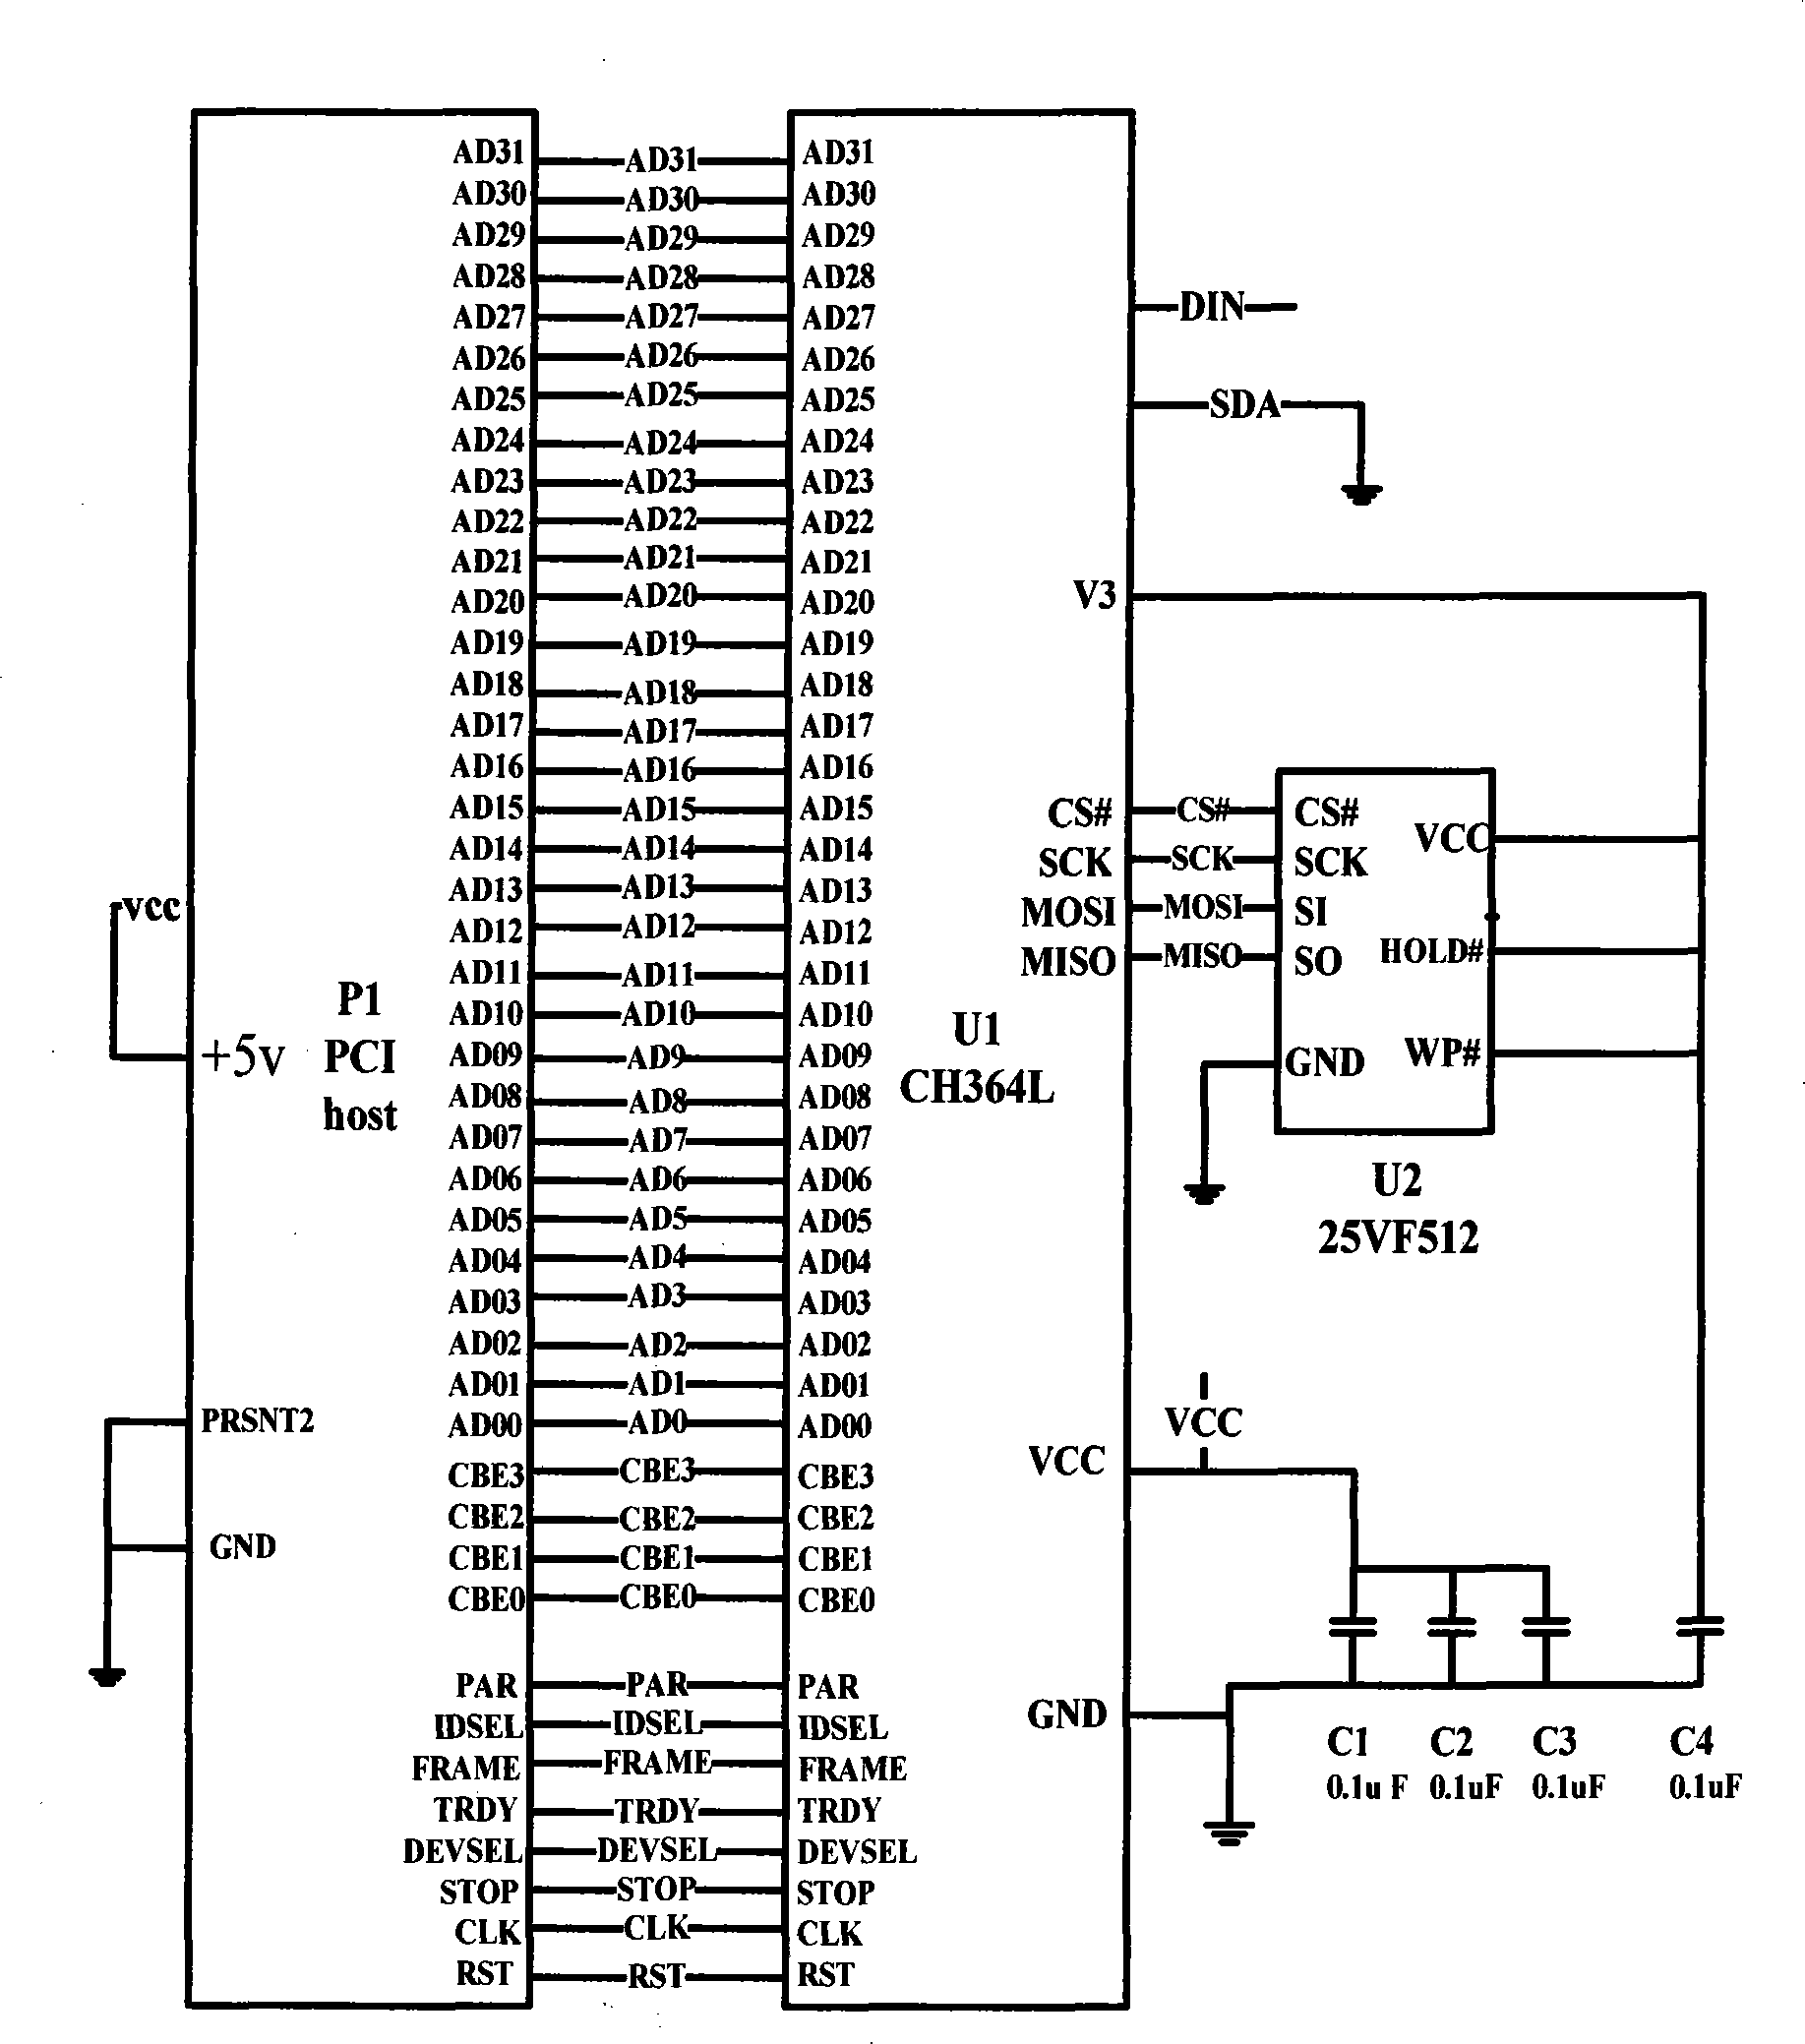 PCI equipment using serial flash memory